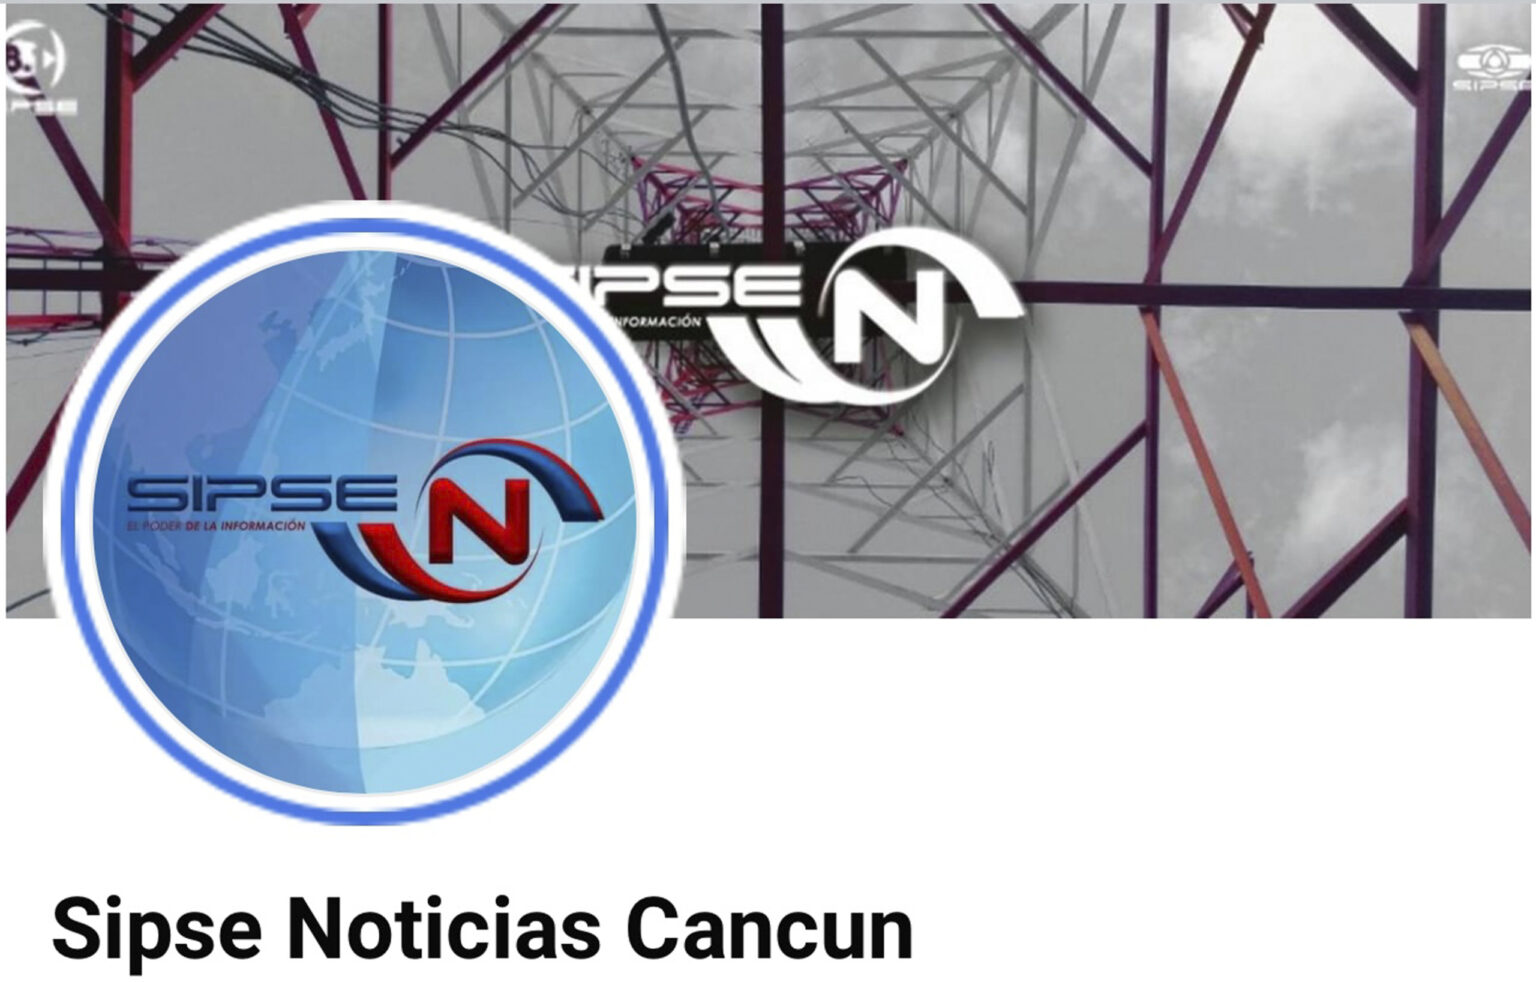 Sipse_Noticias_Cancun_01